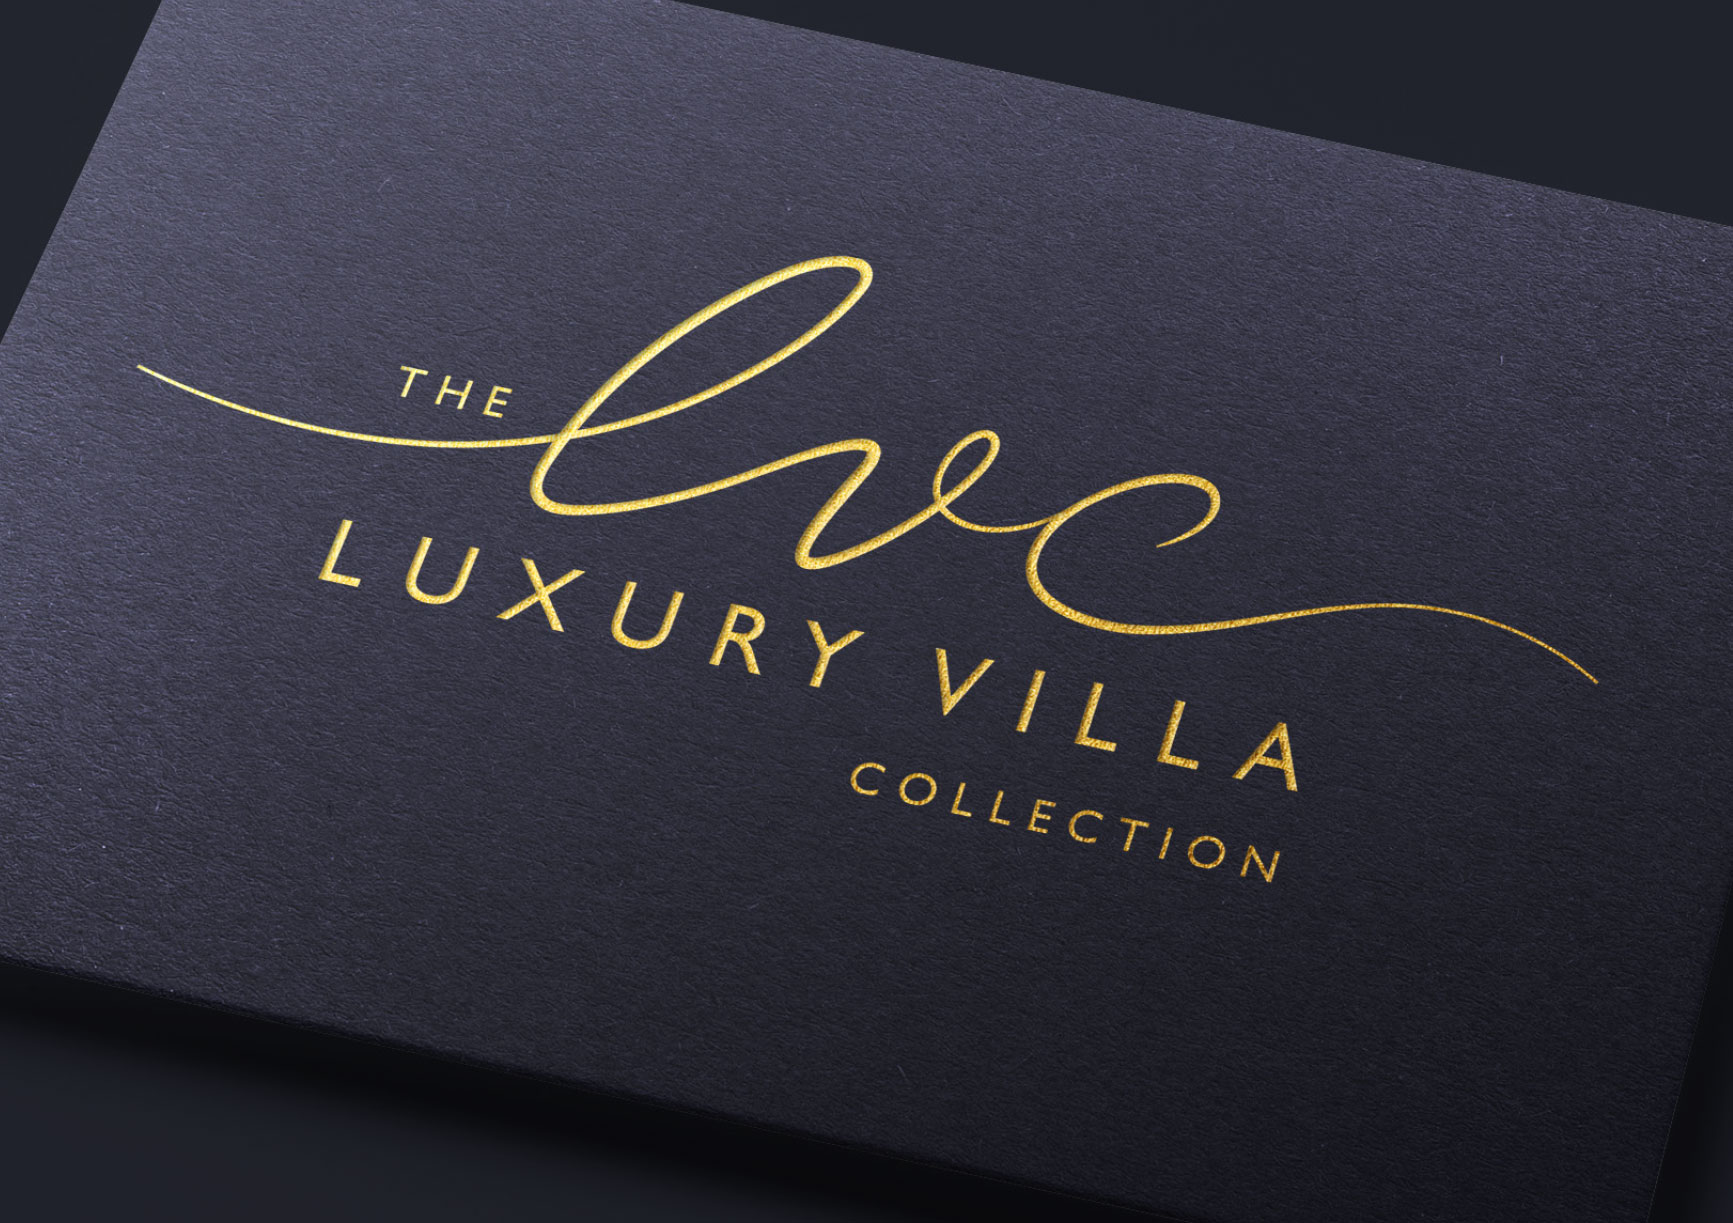 The Luxury Villa Collection